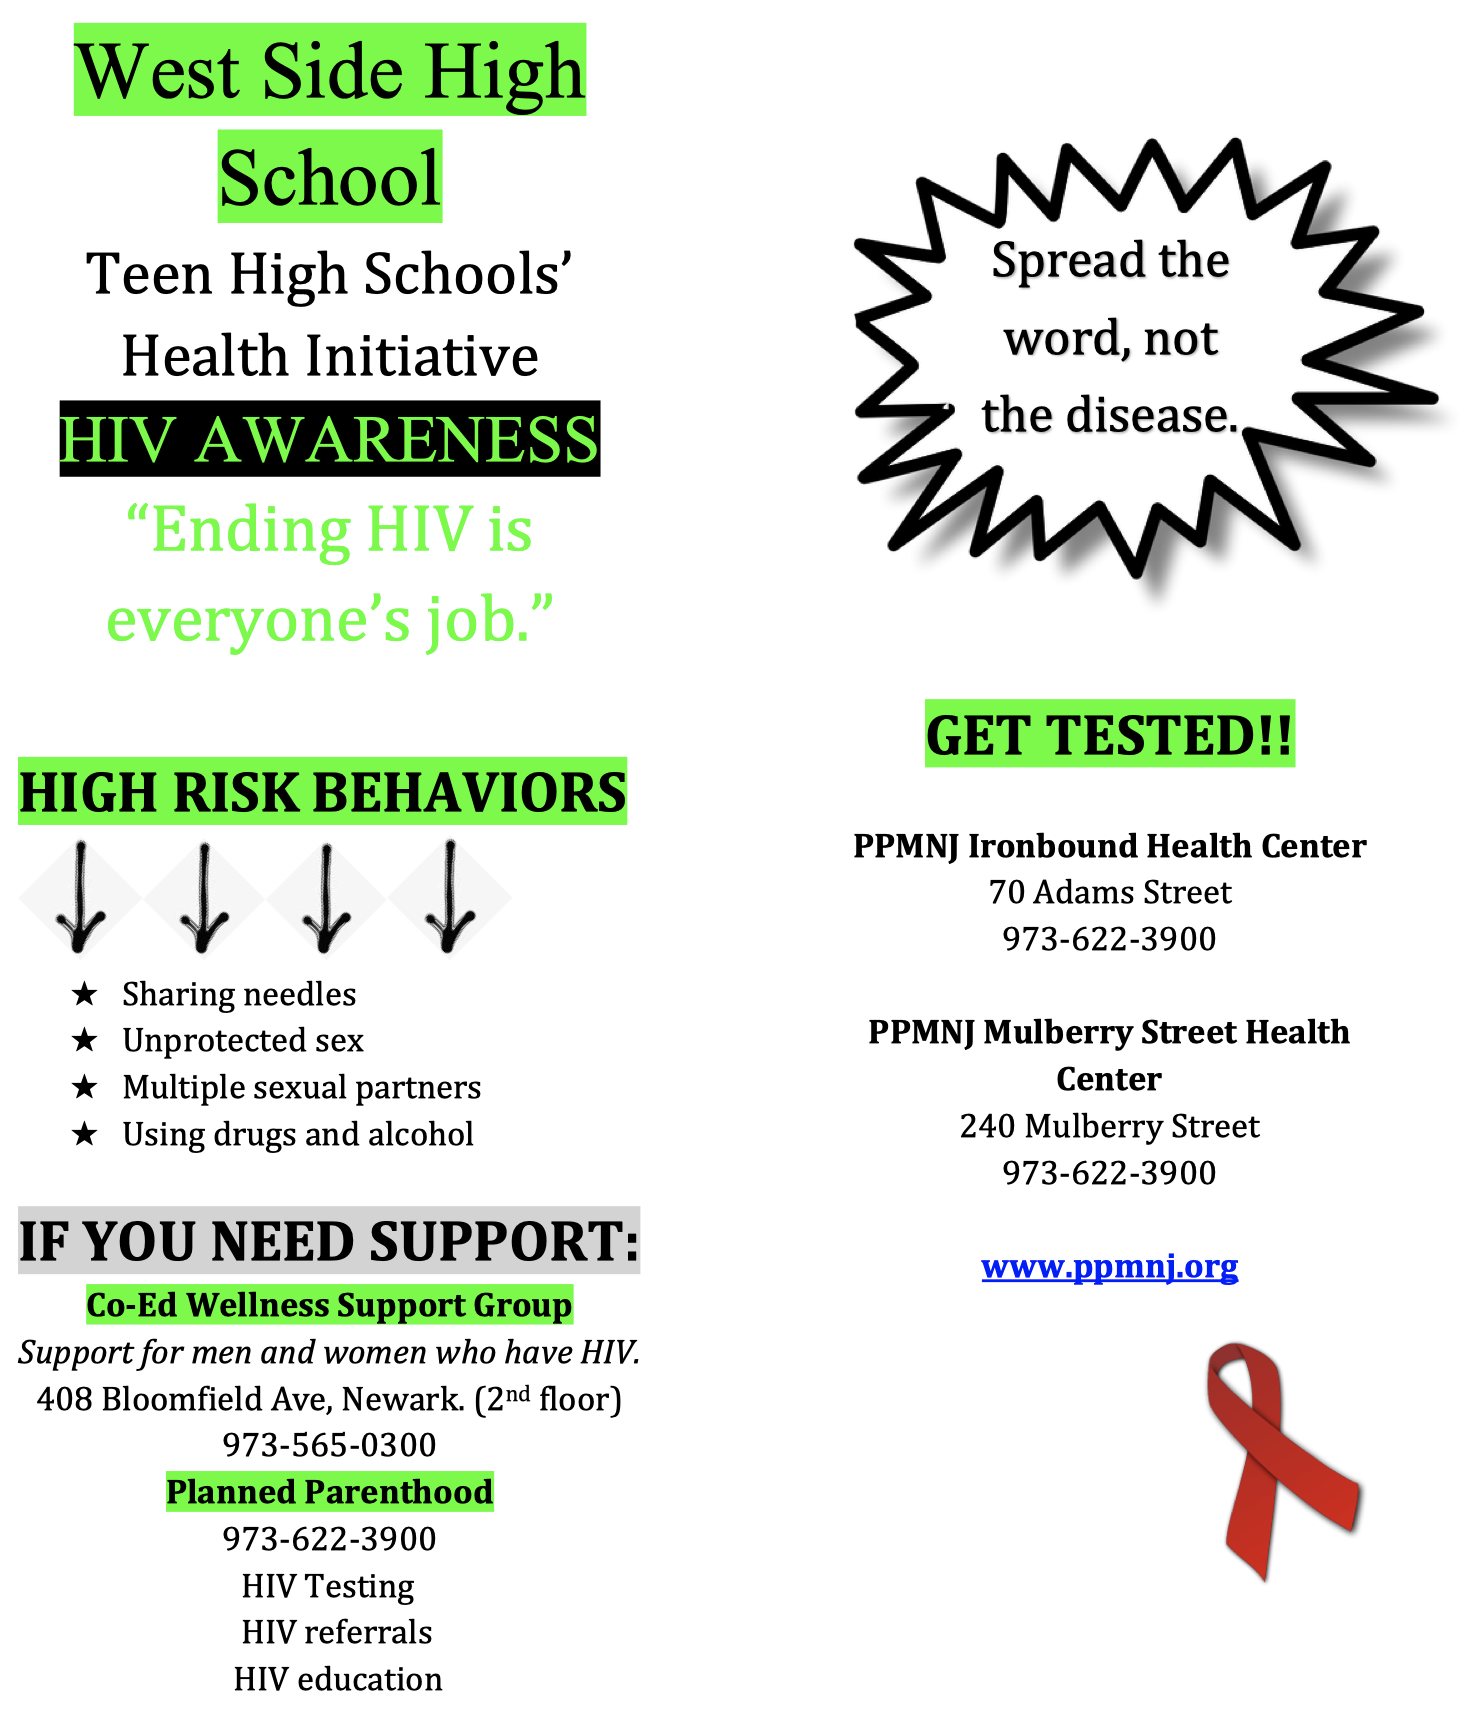 West Side High School - HIV Awareness